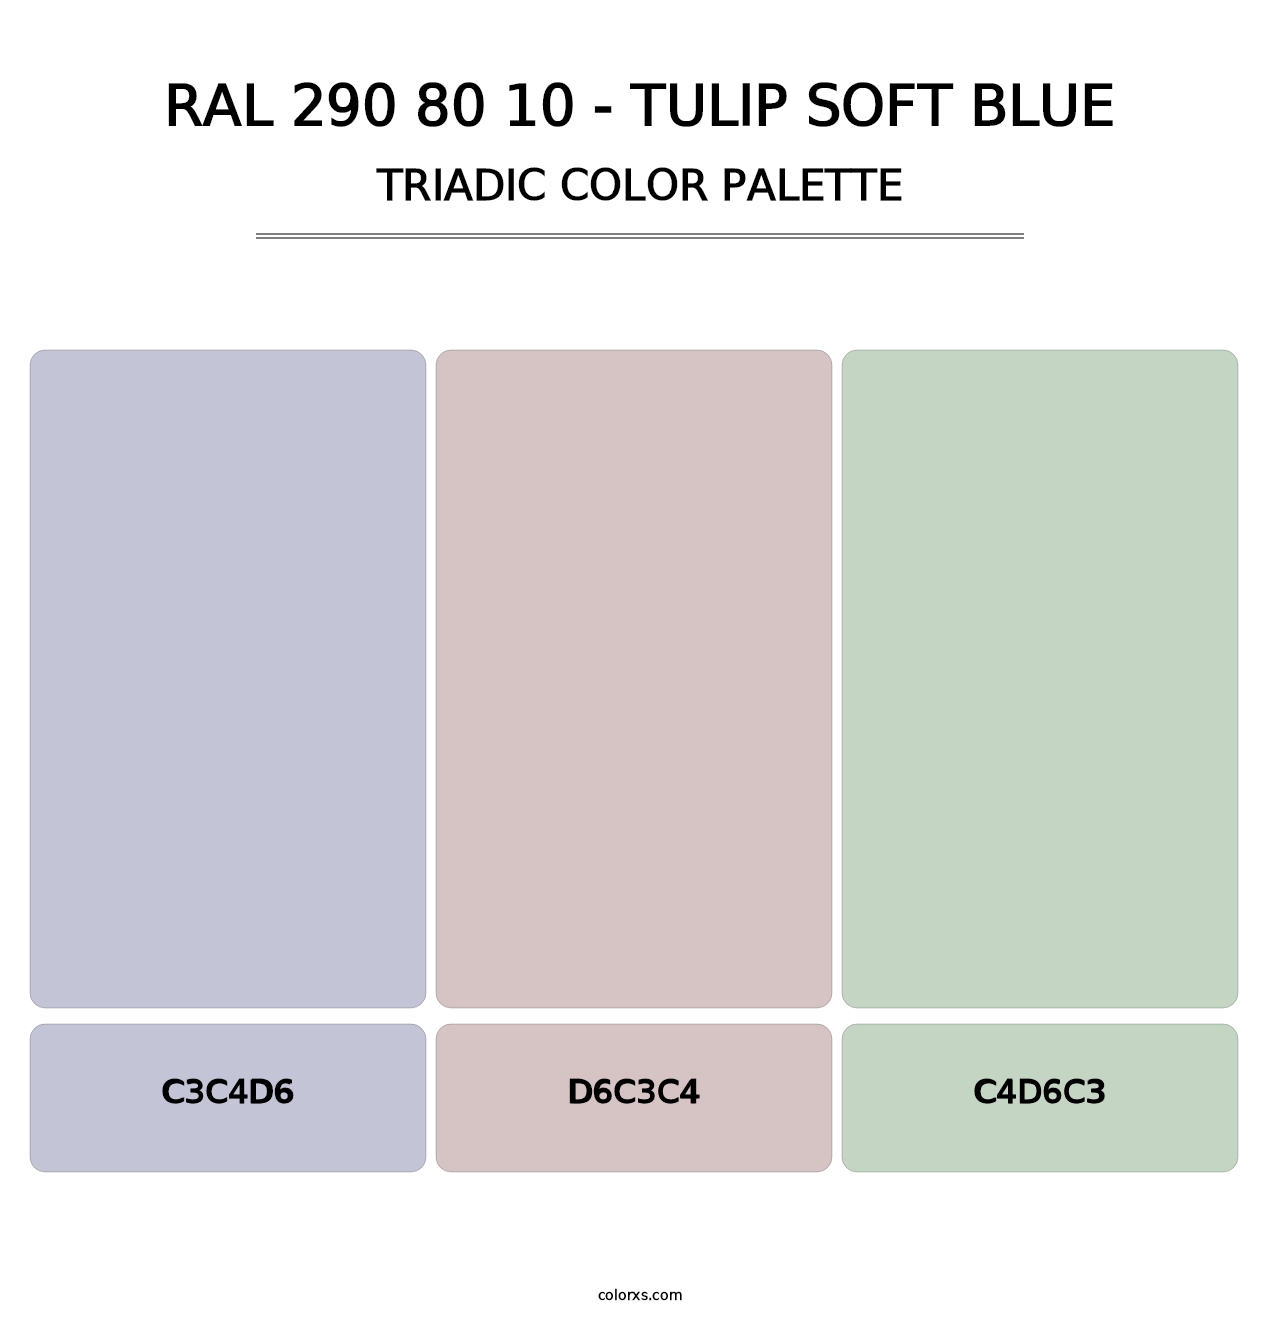 RAL 290 80 10 - Tulip Soft Blue - Triadic Color Palette